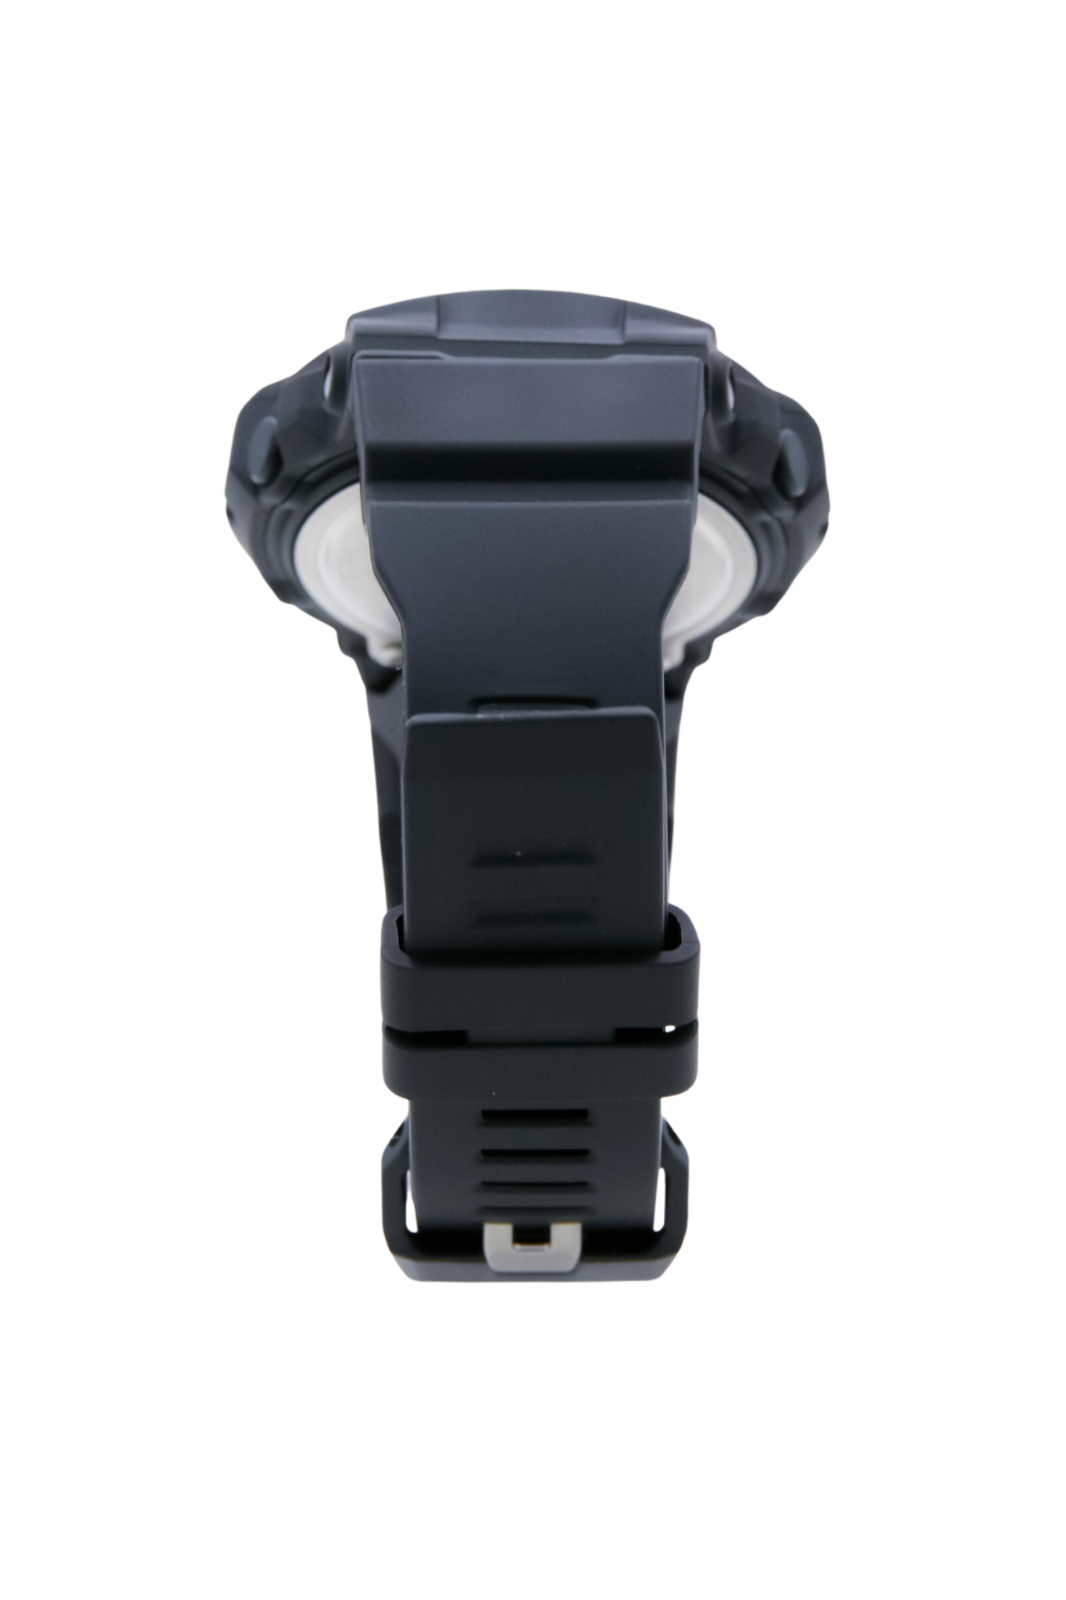 Casio G-shock Analog-Digital Bluetooth Resin Strap Men's Watch GBA800SF-1A 0889232258454